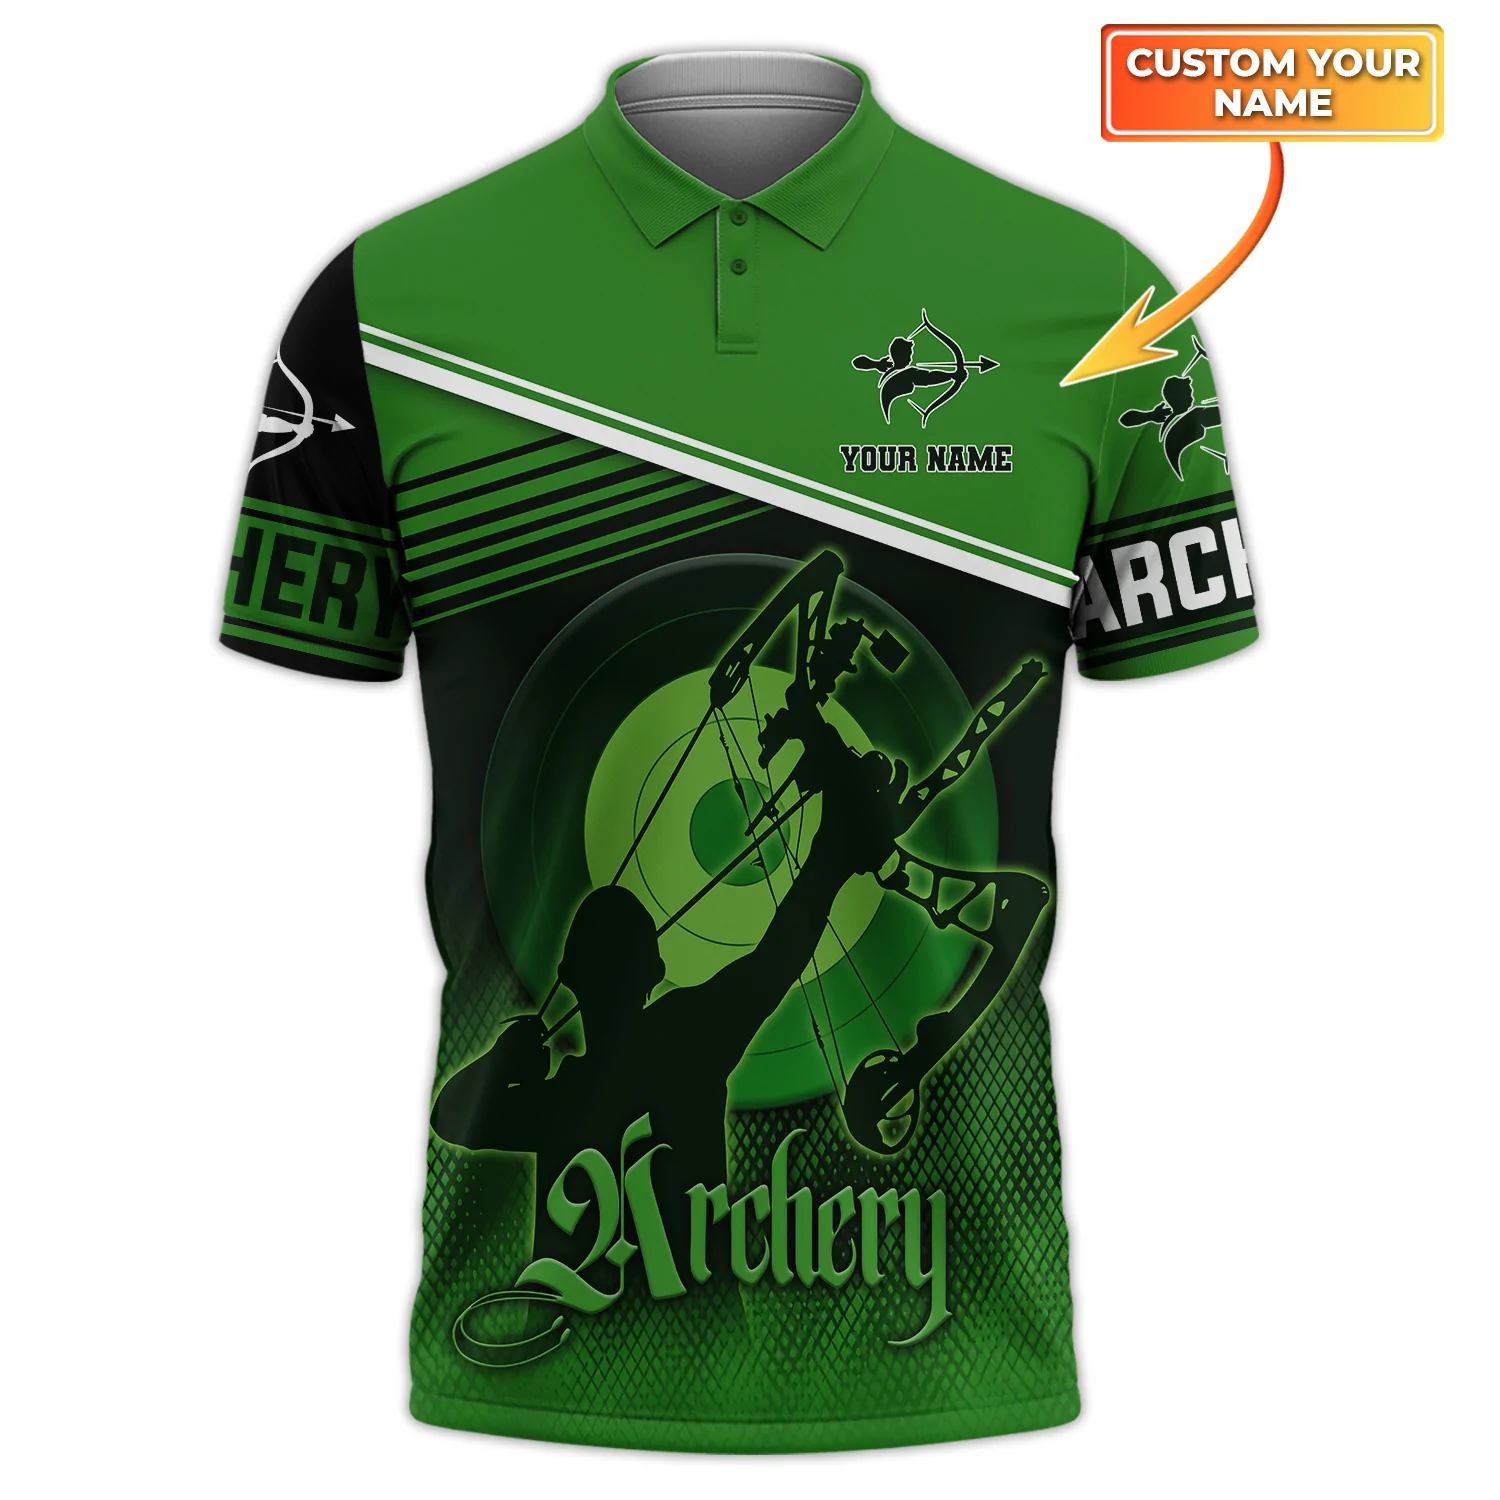 Green Archery Polo Shirt Customize Name For Men/ Women/ Archery Shirts/ Archery Gifts